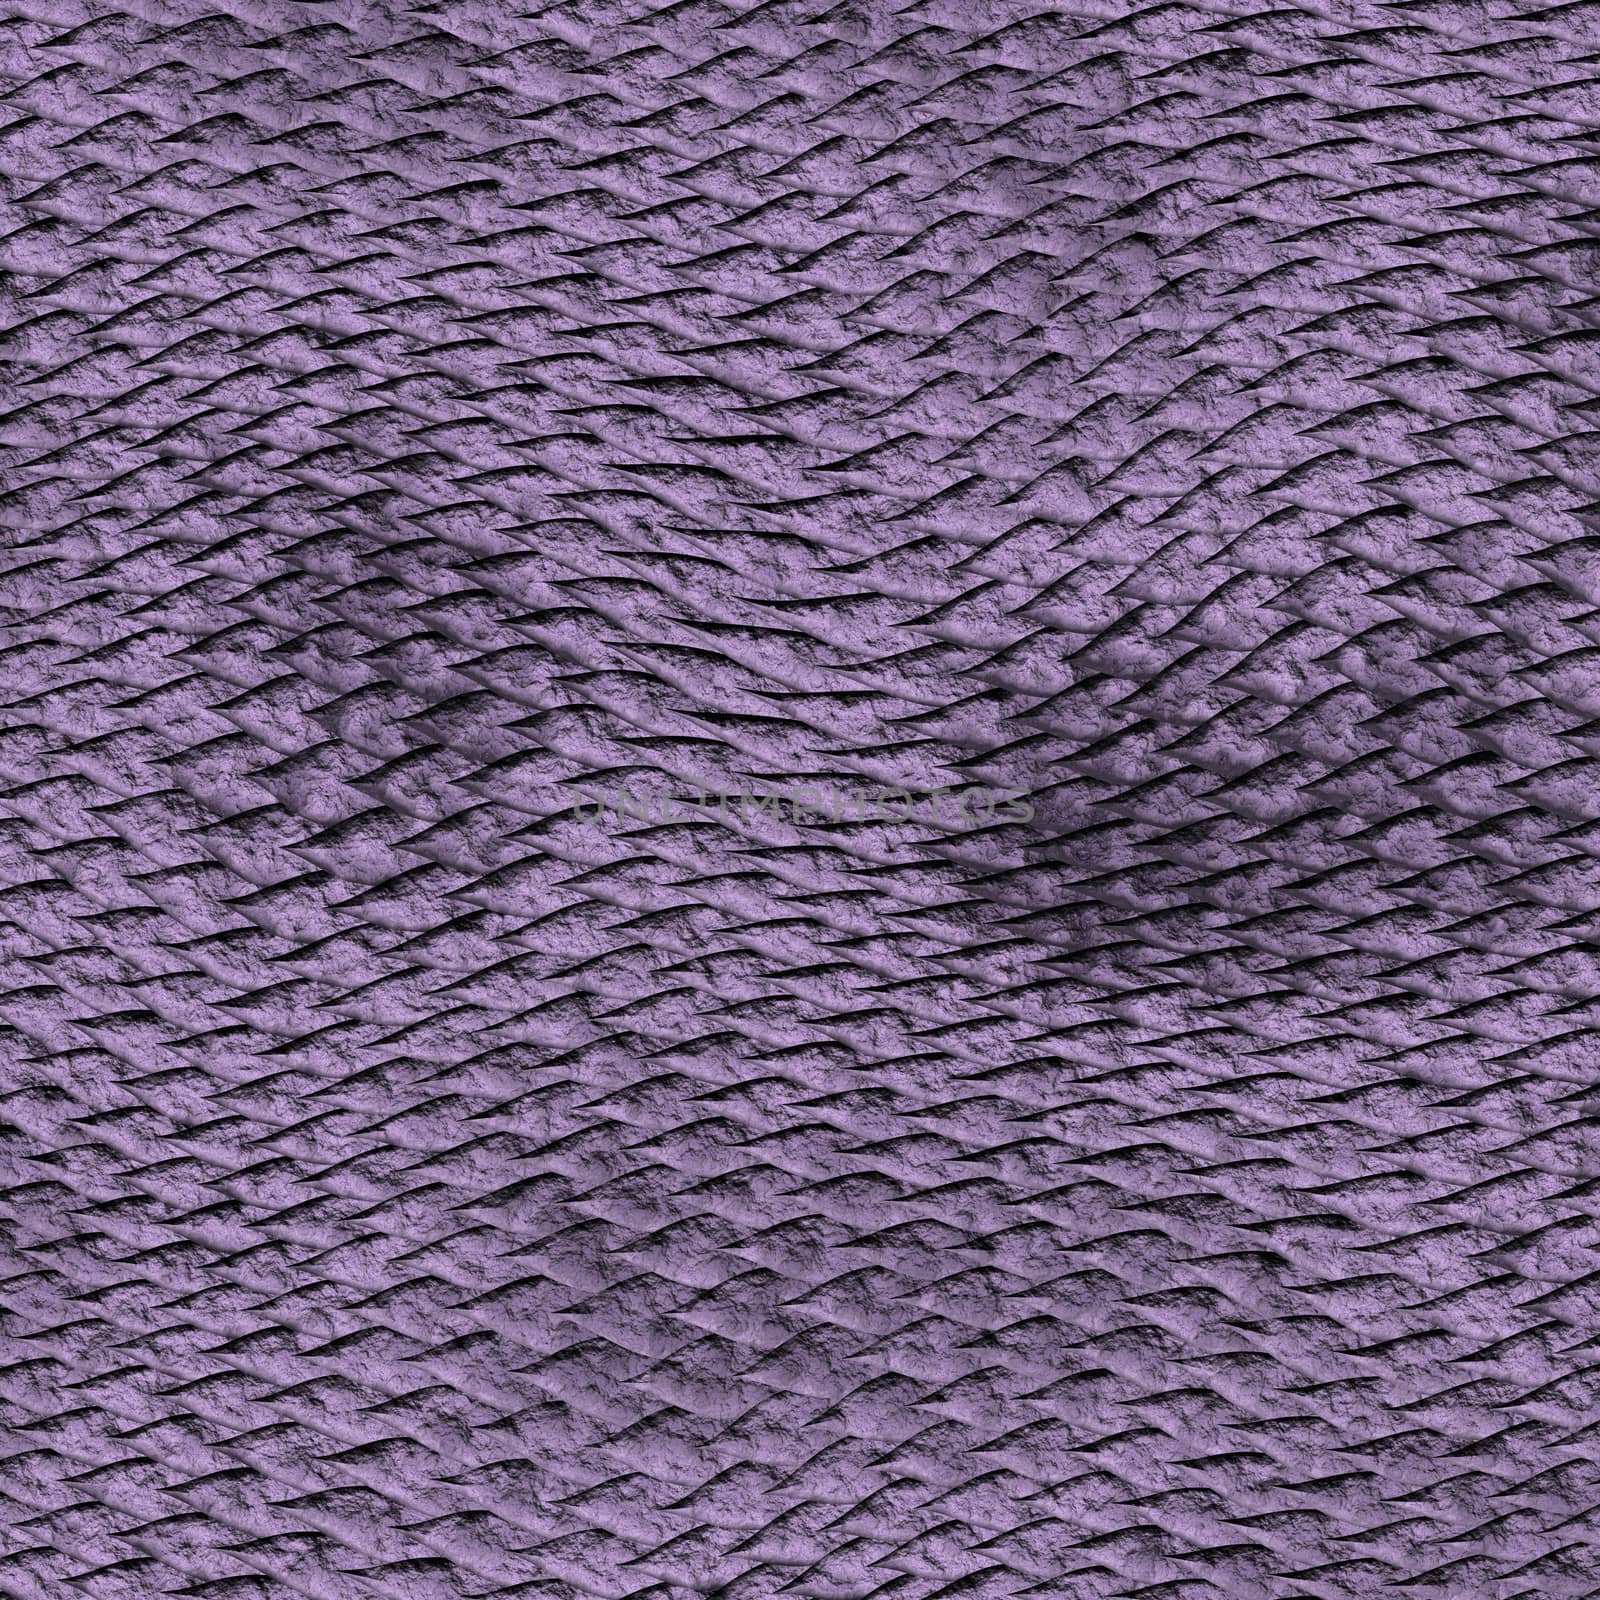 Purple dragon skin texture